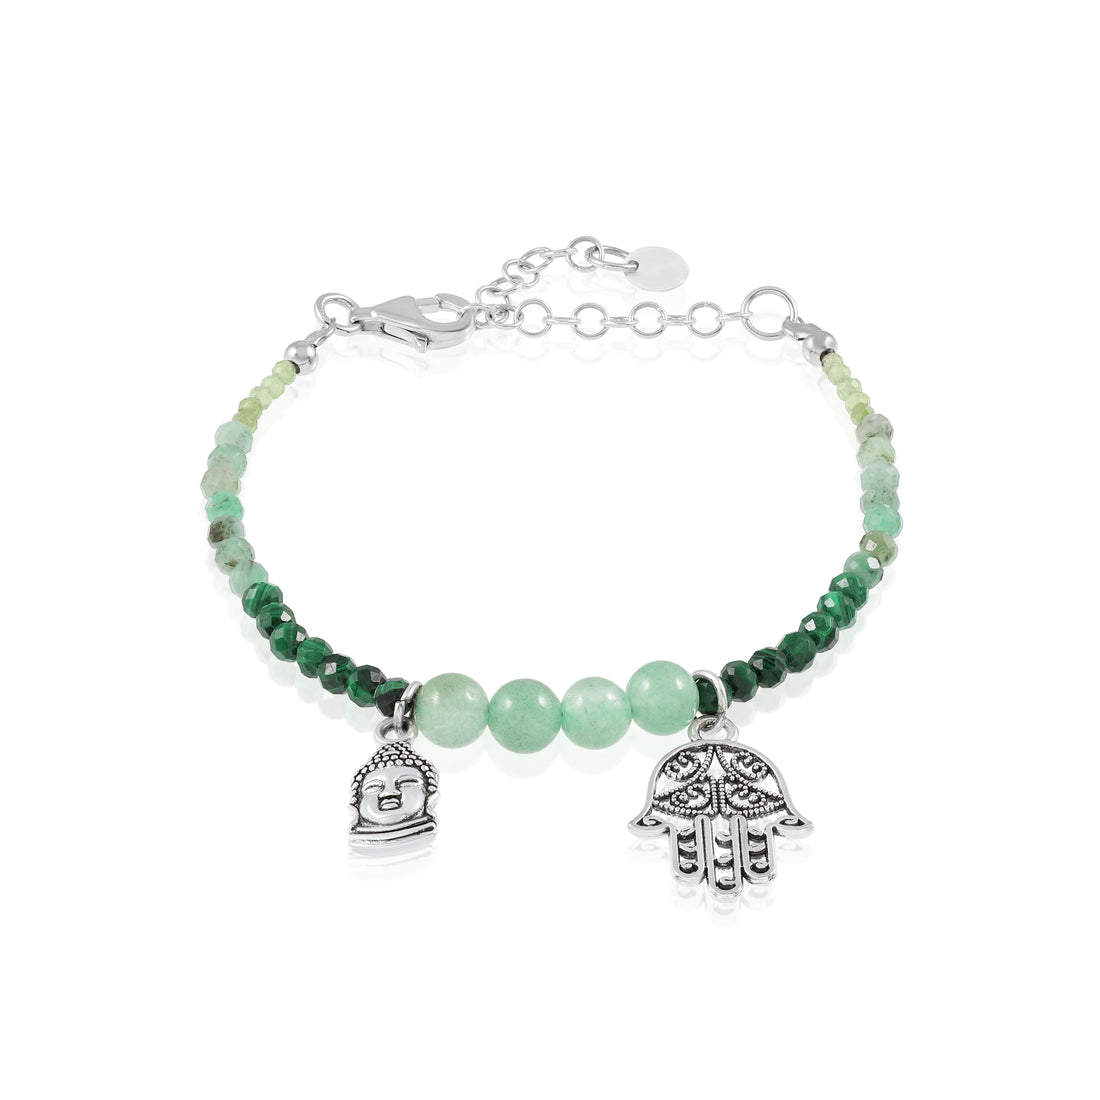 Complete Green Gemstone Beads Bracelet